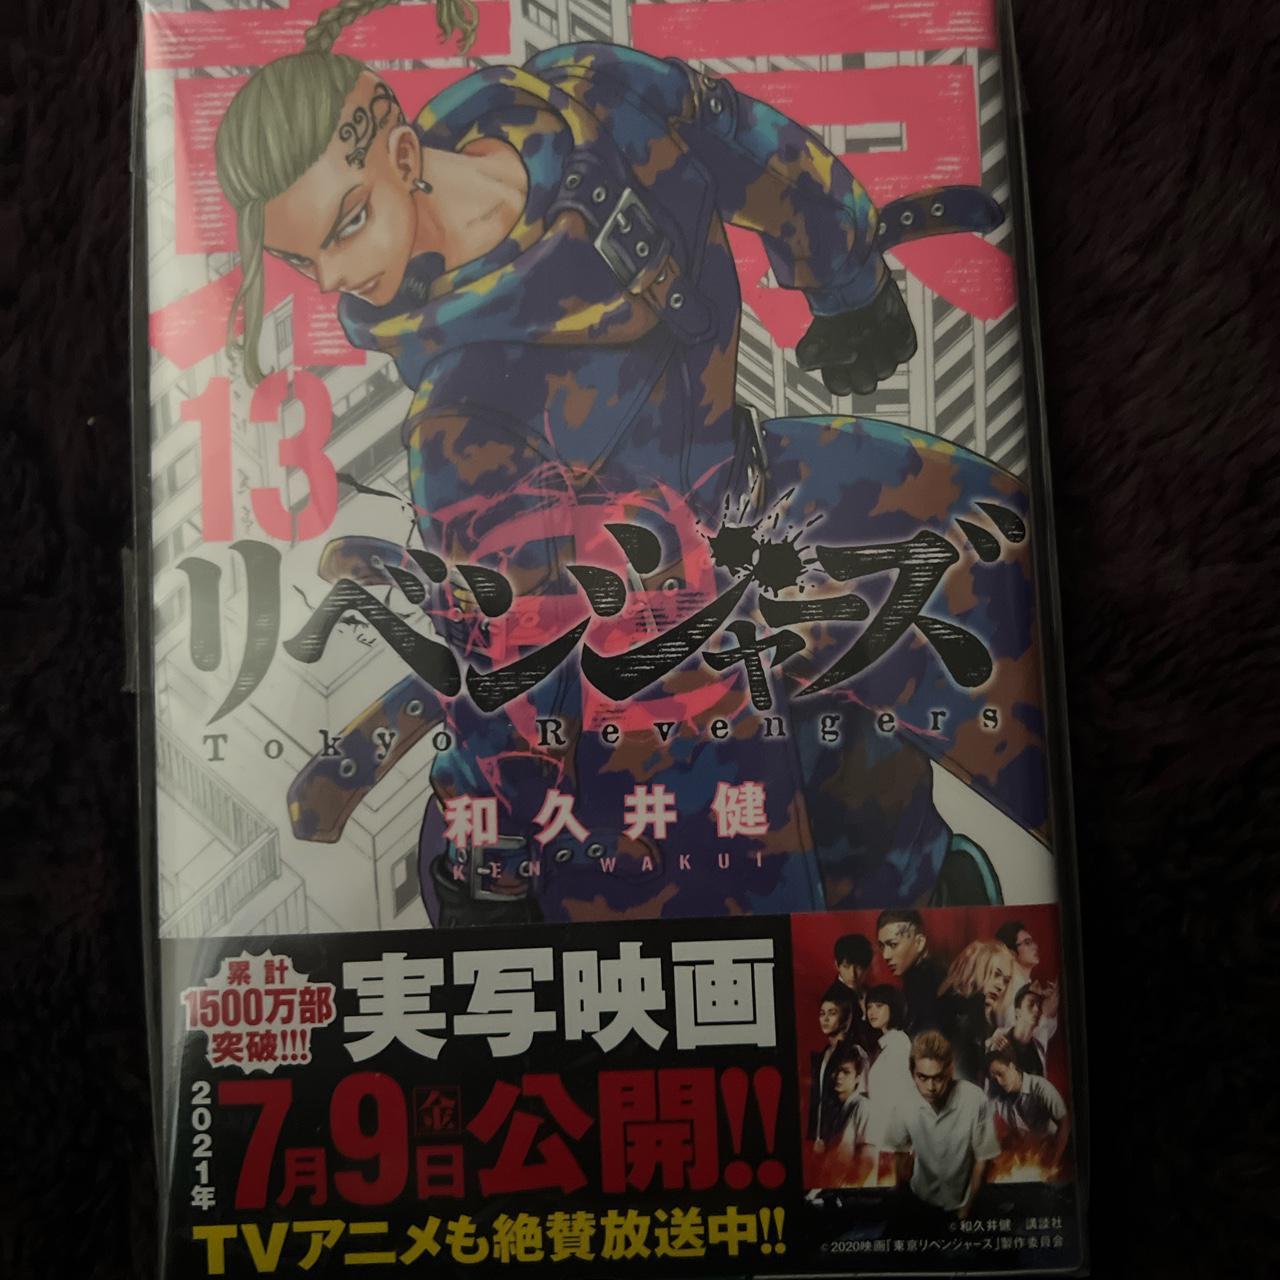 Product Image 1 - Tokyo Revengers manga (in Japanese)
Vol